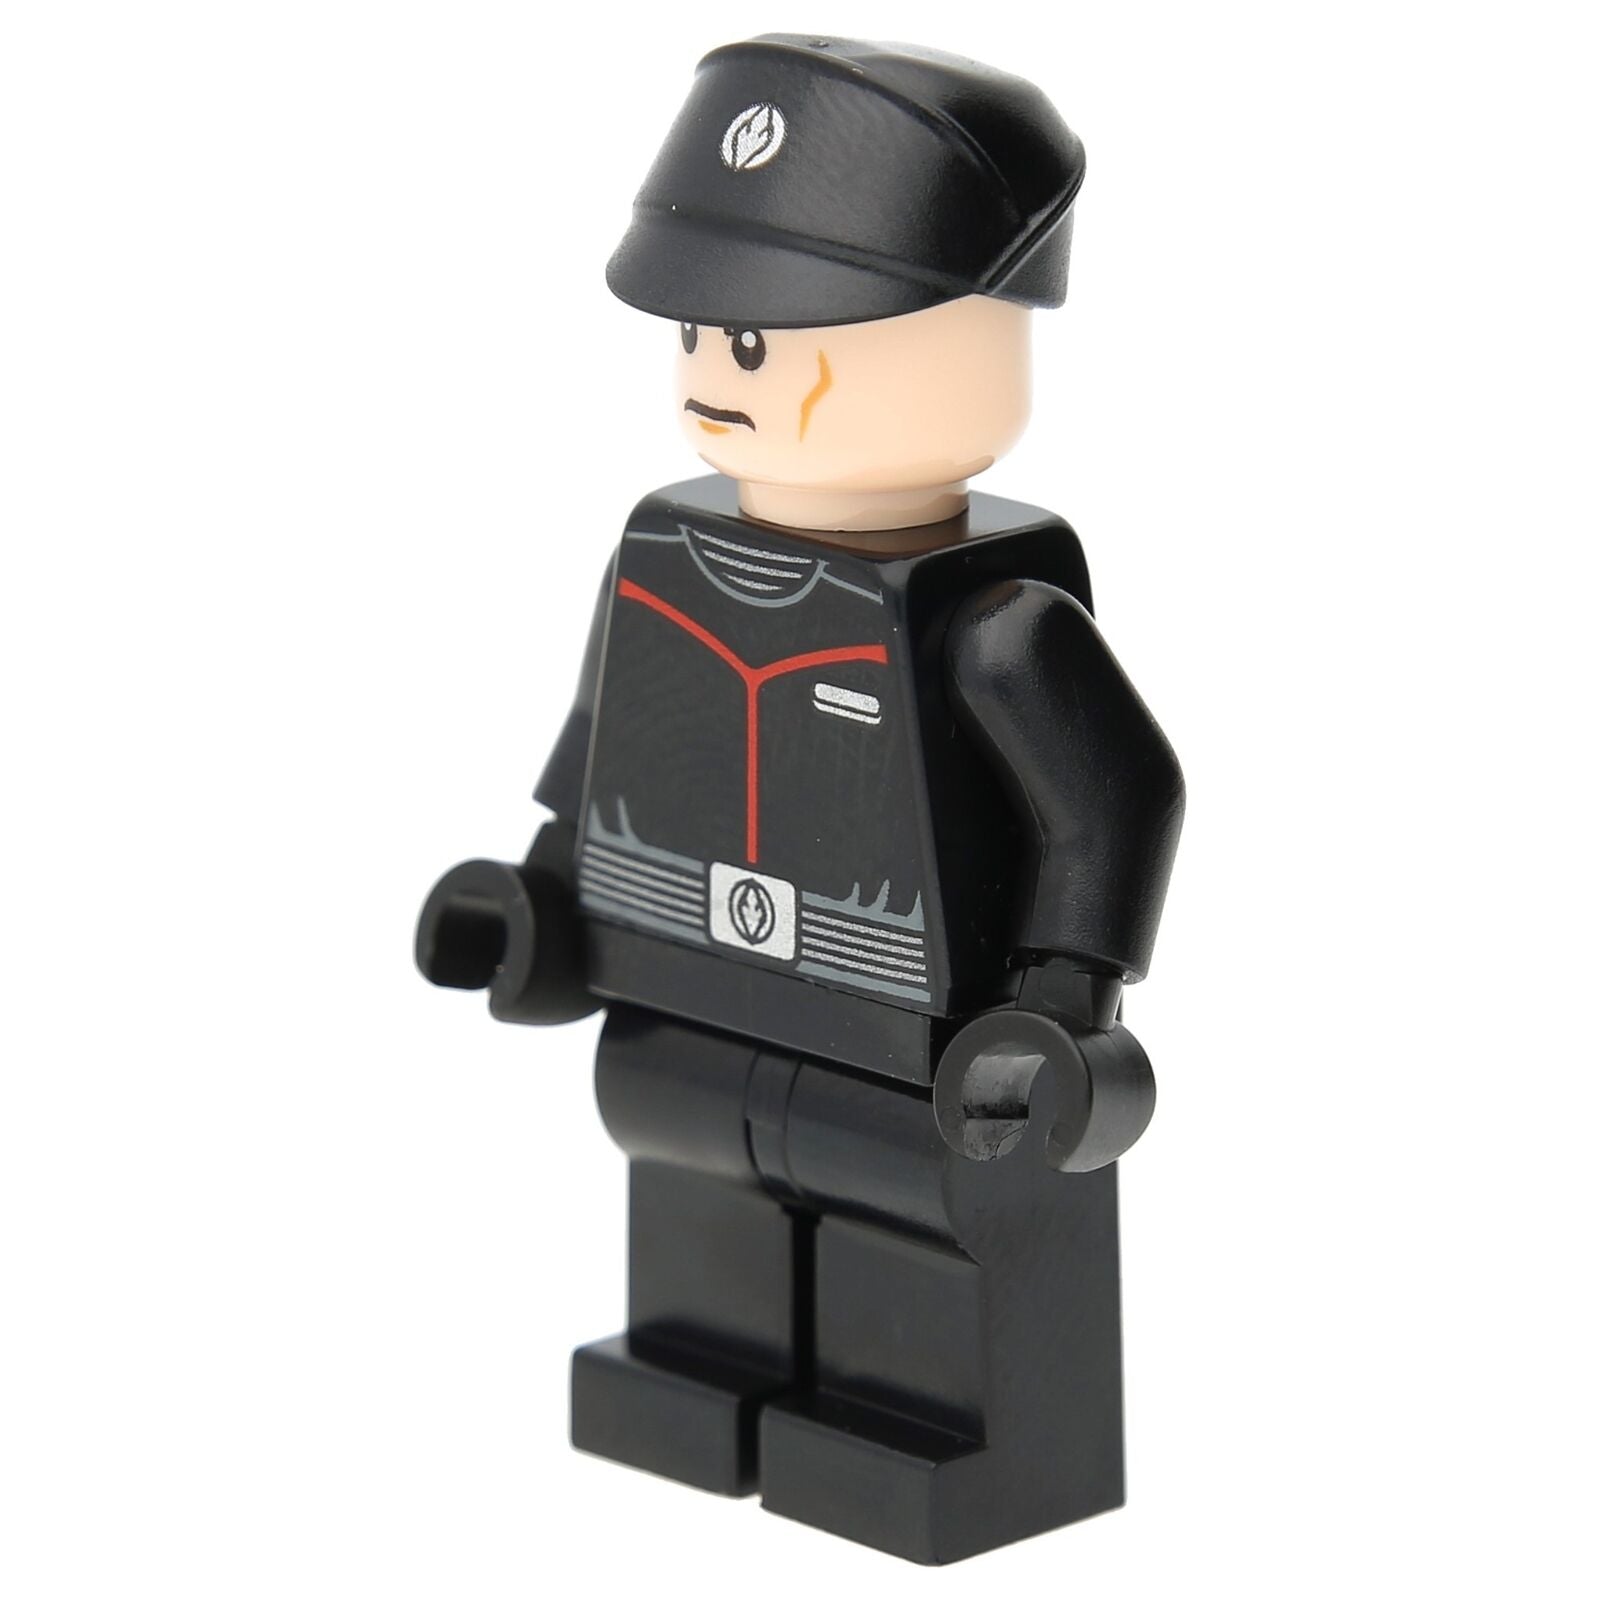 LEGO Star Wars Minifigure - Sith Fleet Admiral